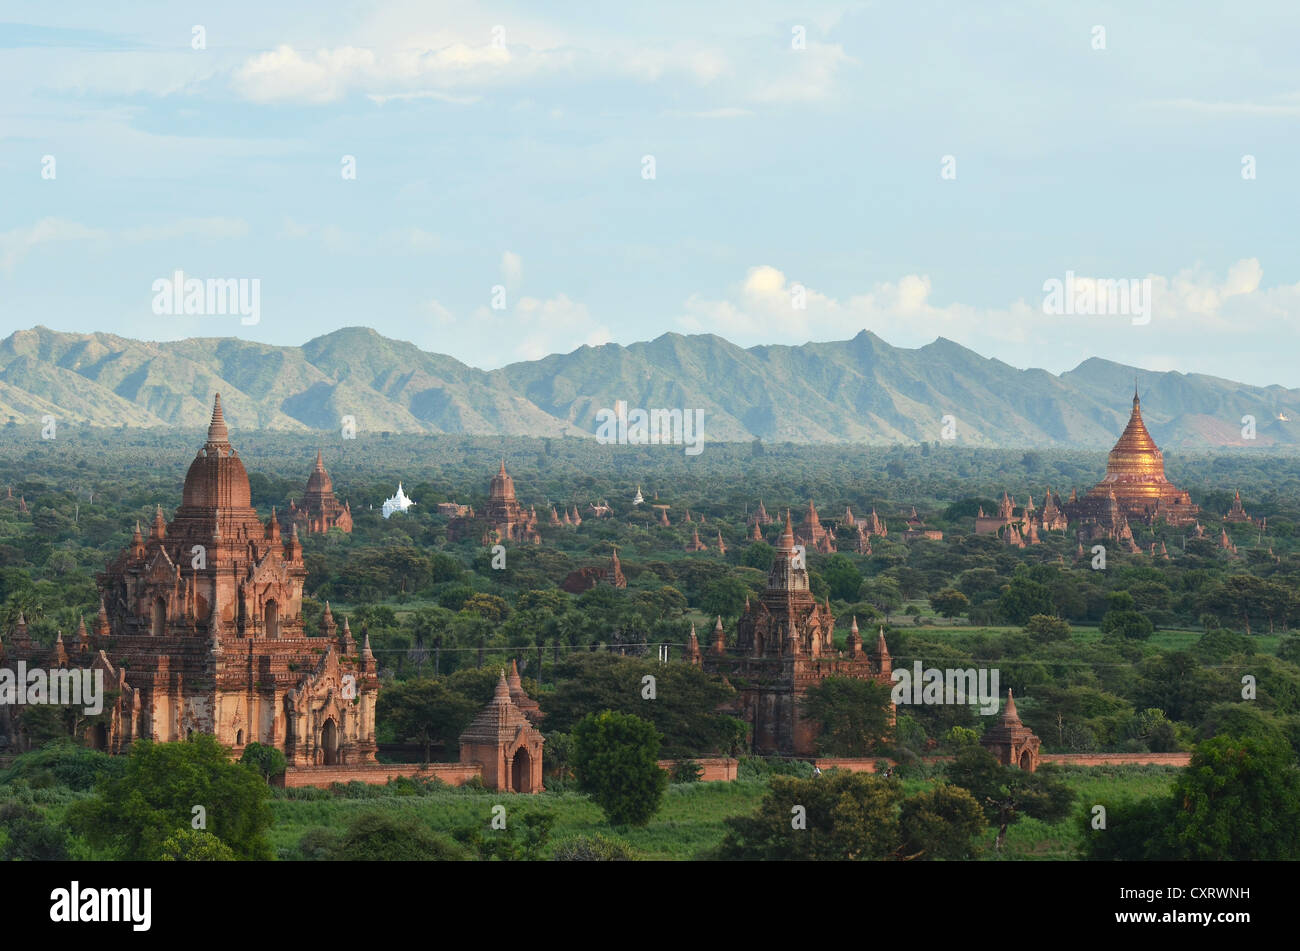 Temples and pagodas in Bagan, Myanmar, Burma, Southeast Asia, Asia Stock Photo